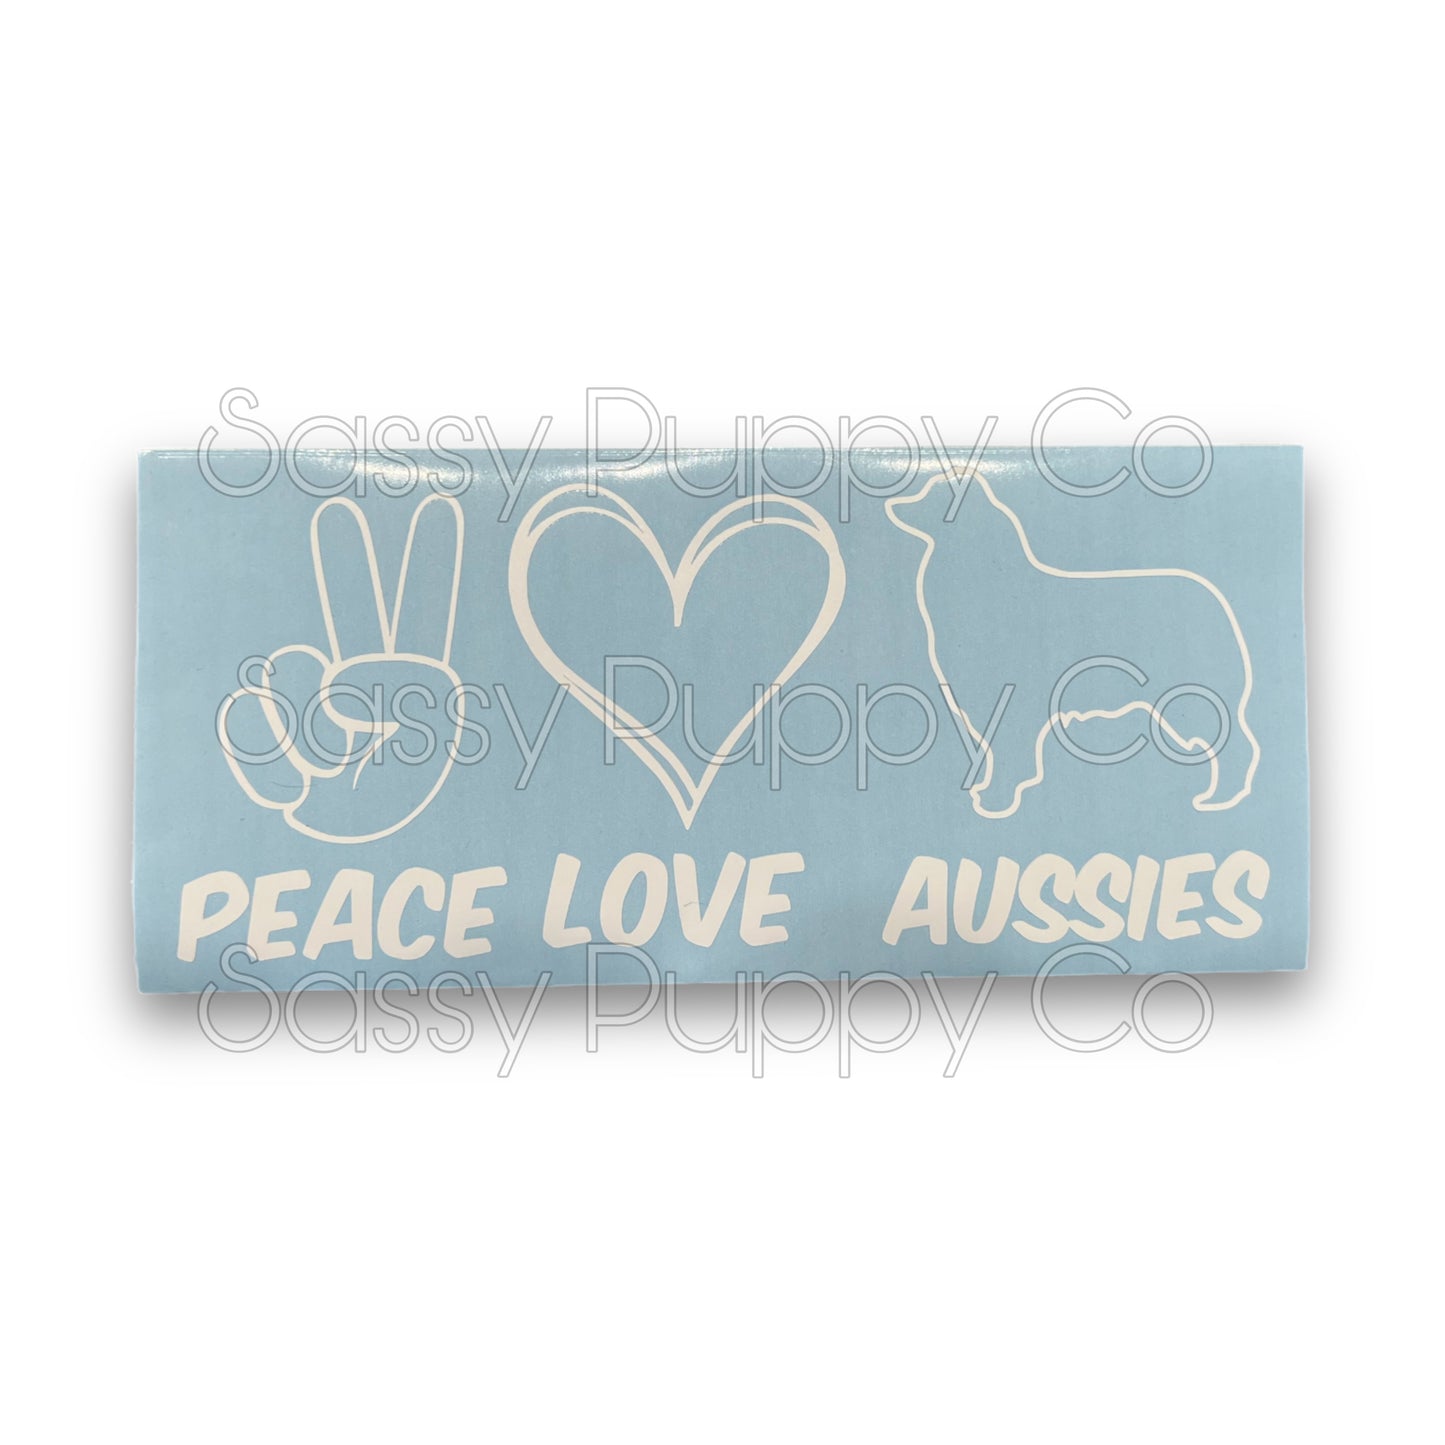 Peace, Love, Aussies Window Decal